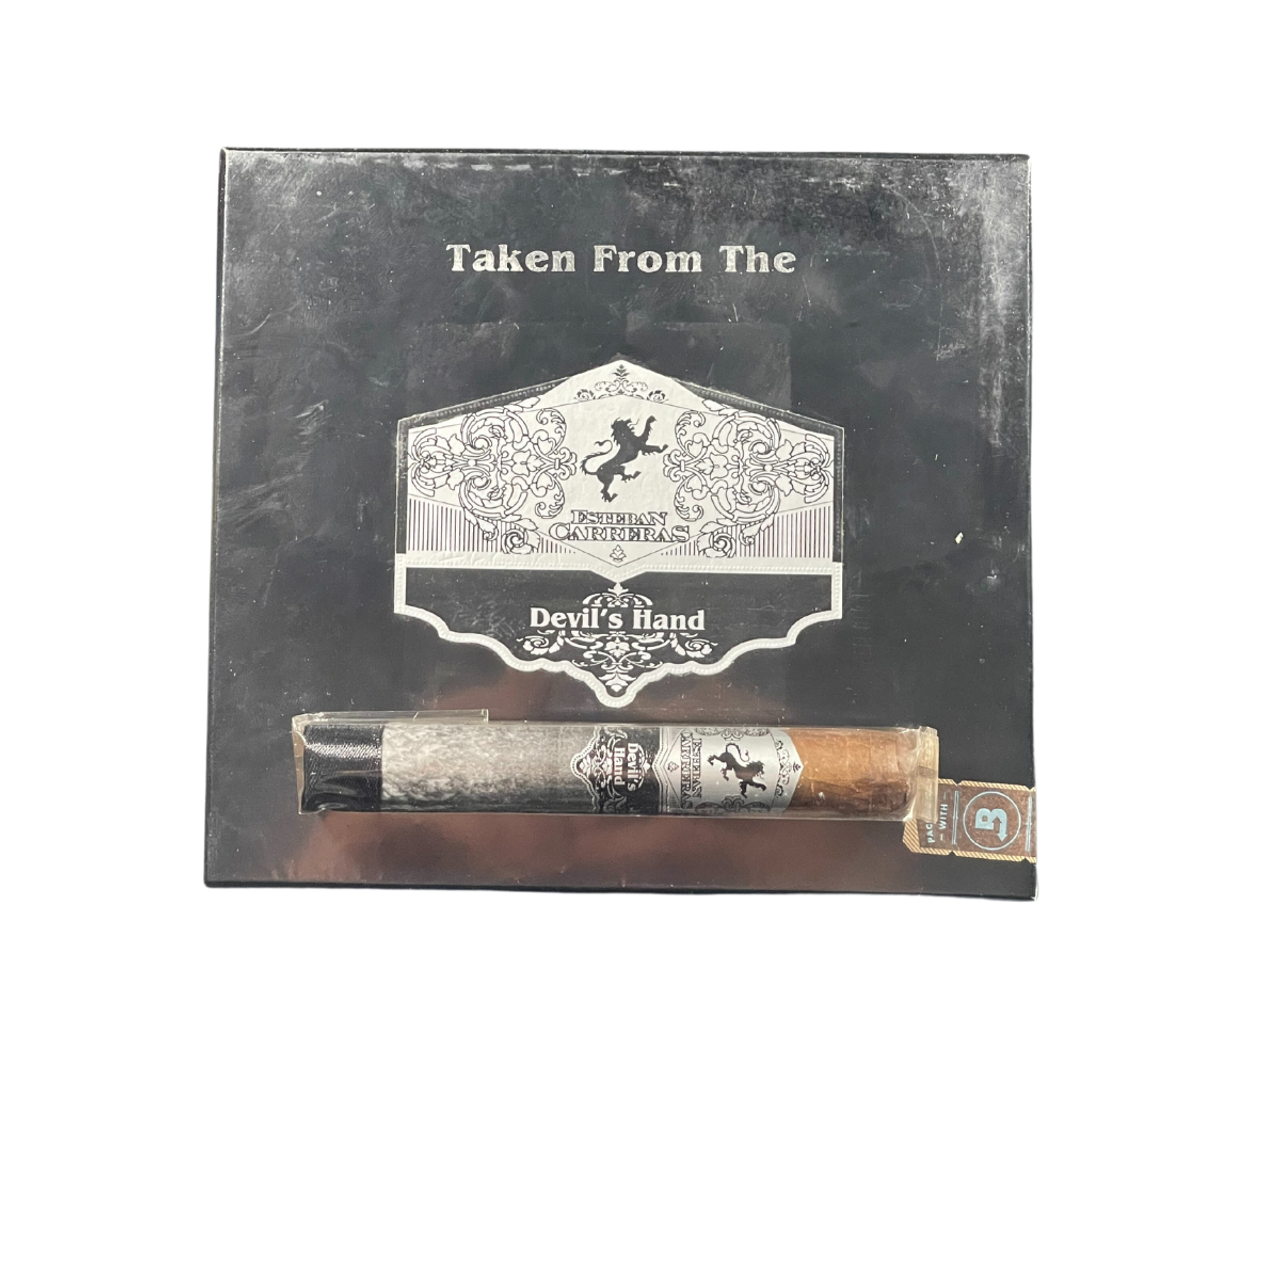 Esteban Carreras Devil's Hand Corojo Maduro Boolit ( 4 3/4 X 46) Box of 32 @cigarsamplers.com for a GREAT price & free shipping!!!